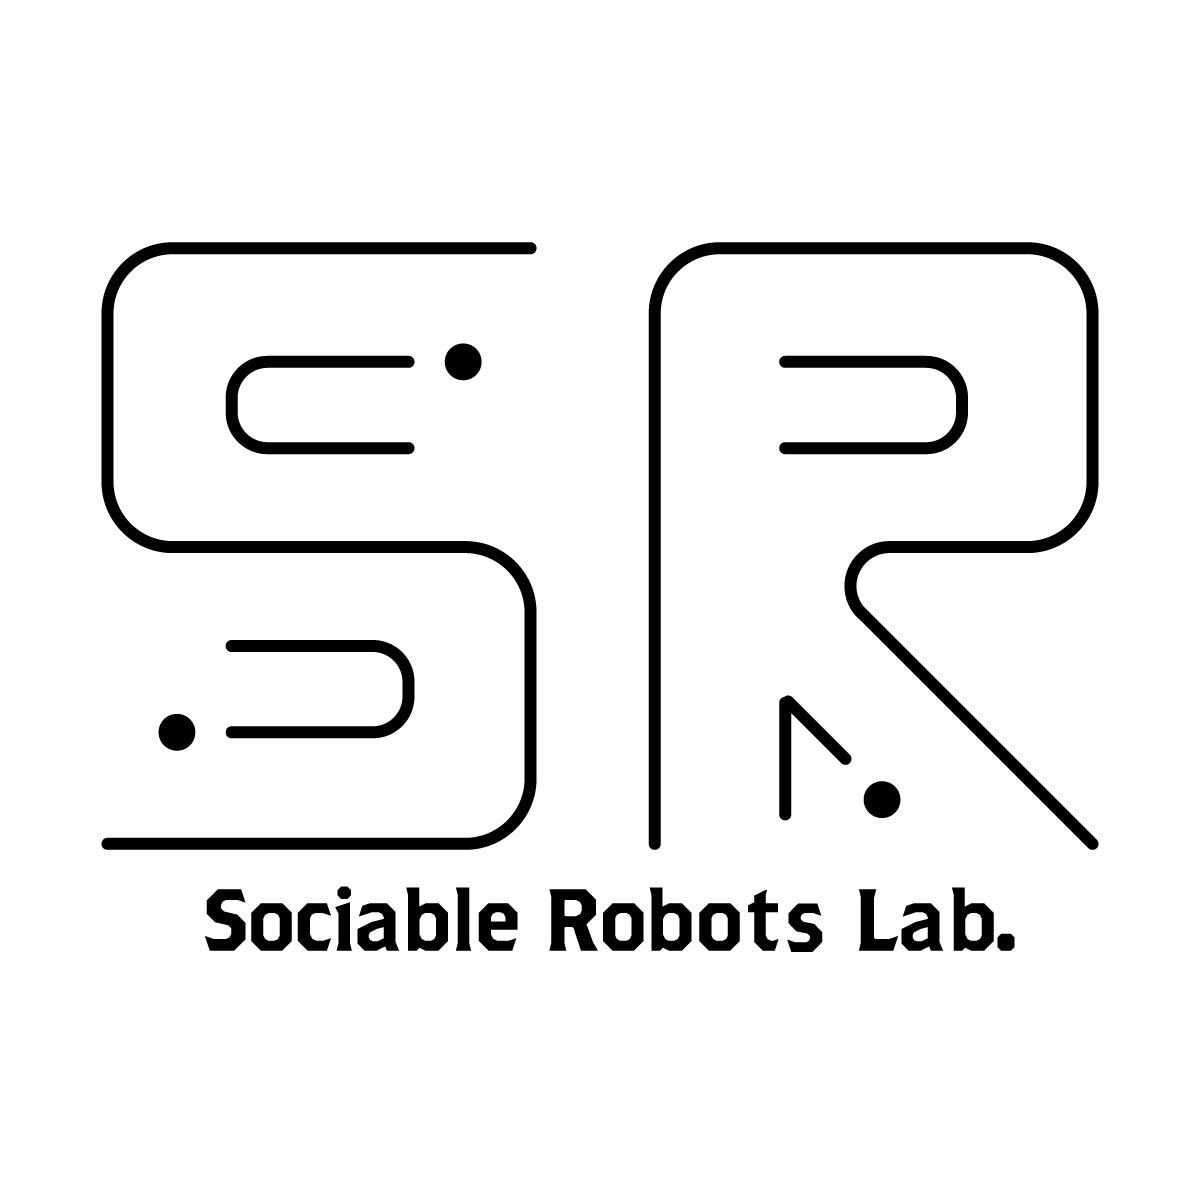 Sociable Robots Lab.